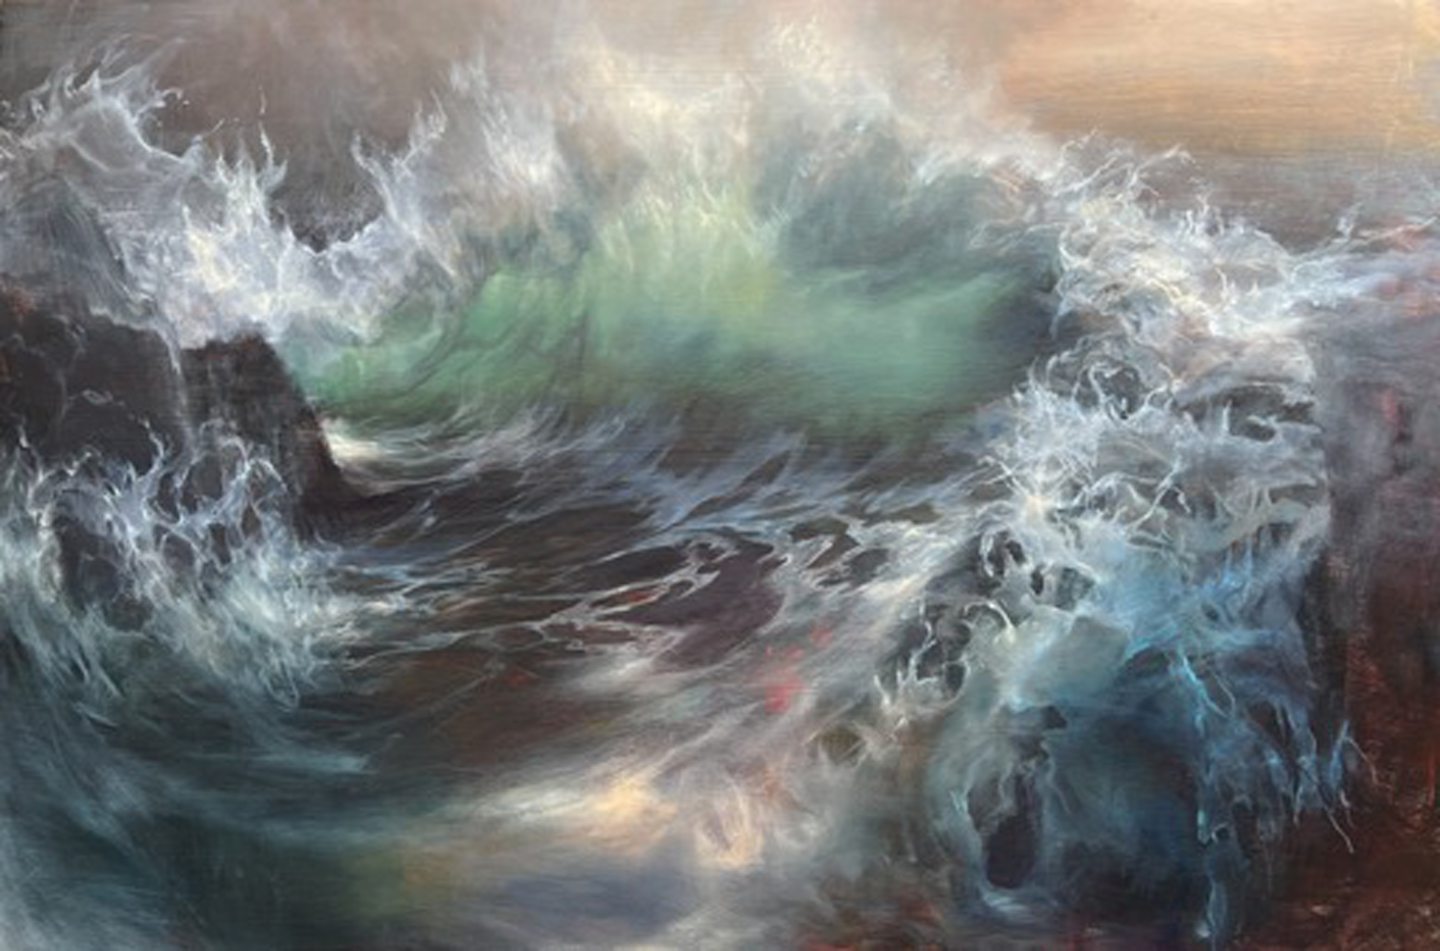 A painting of ocean waves